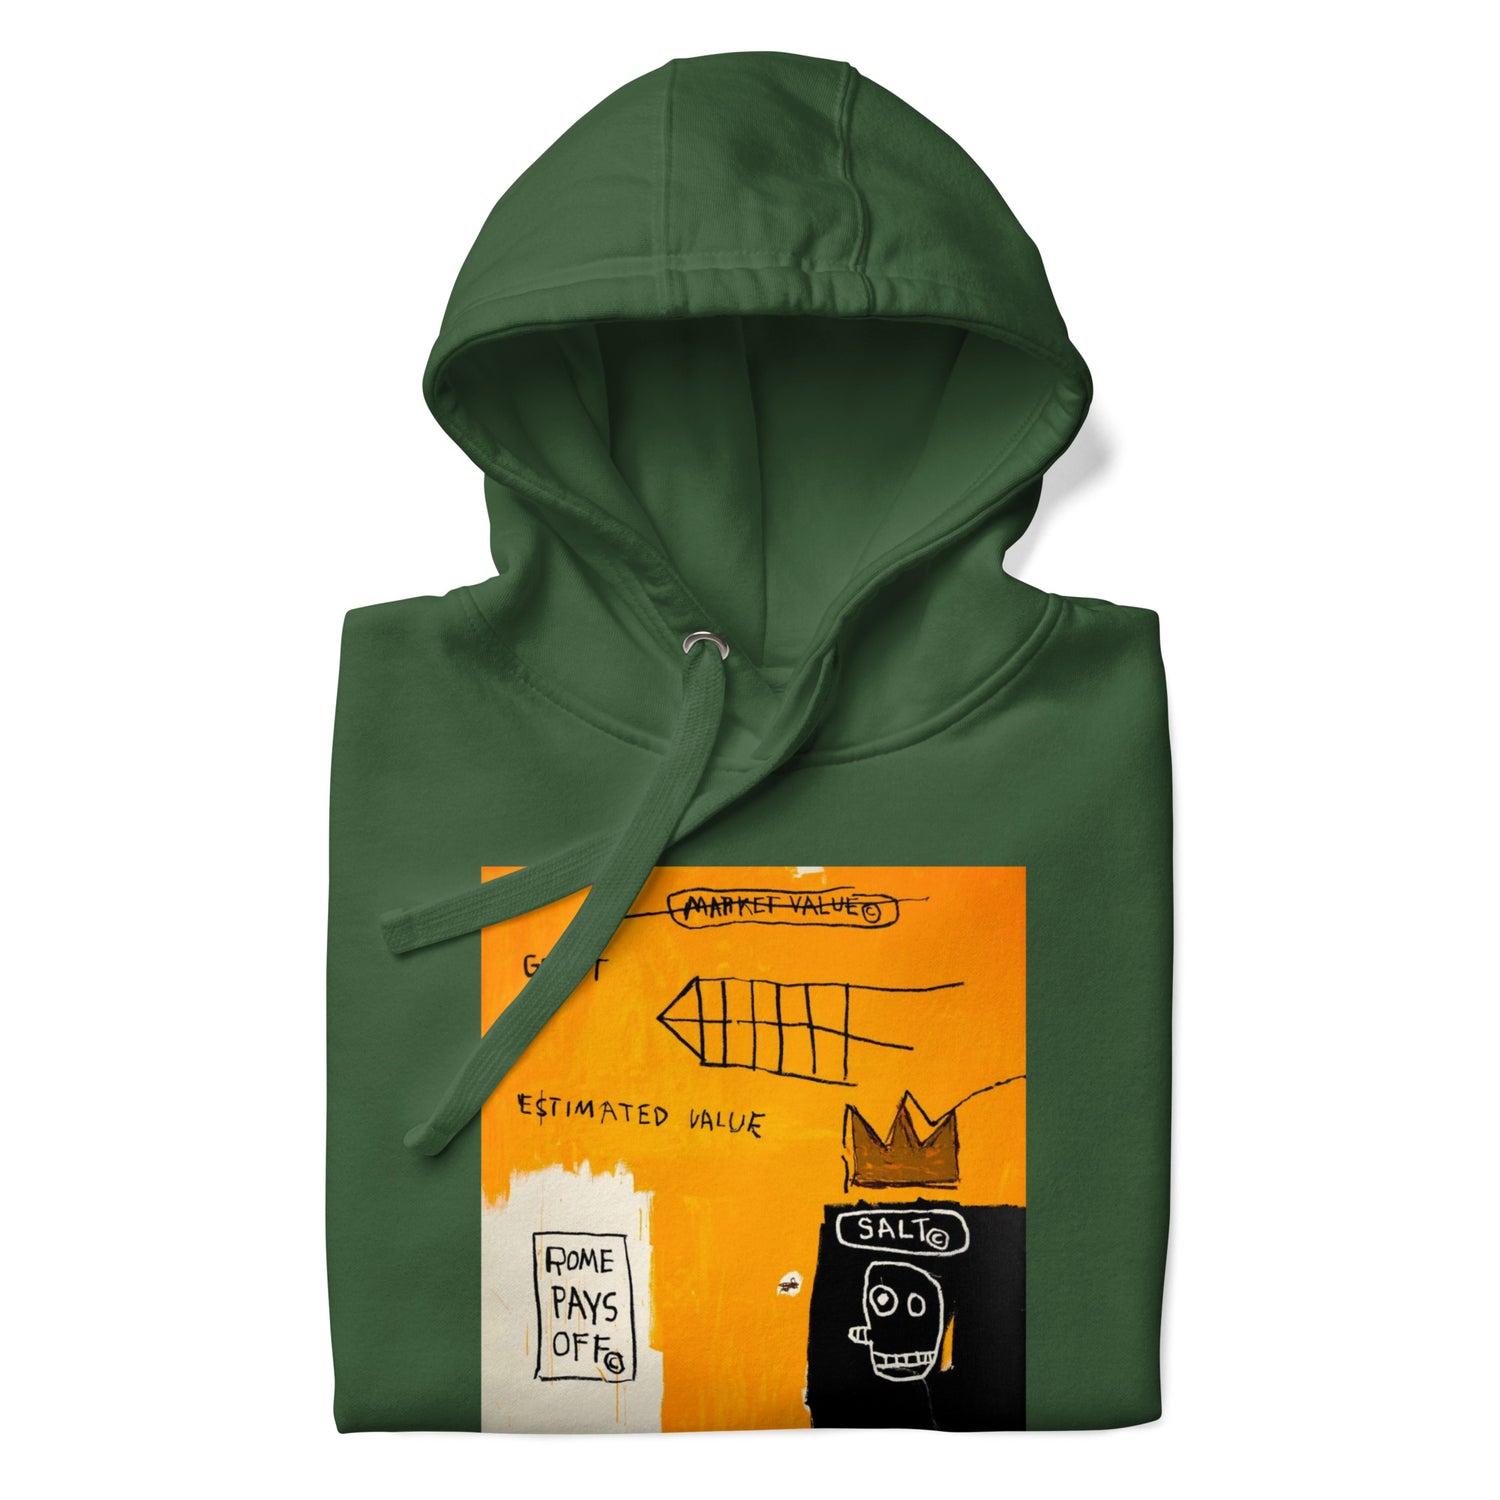 Jean-Michel Basquiat "Rome Pays Off" Artwork Printed Premium Streetwear Sweatshirt Hoodie Forest Green